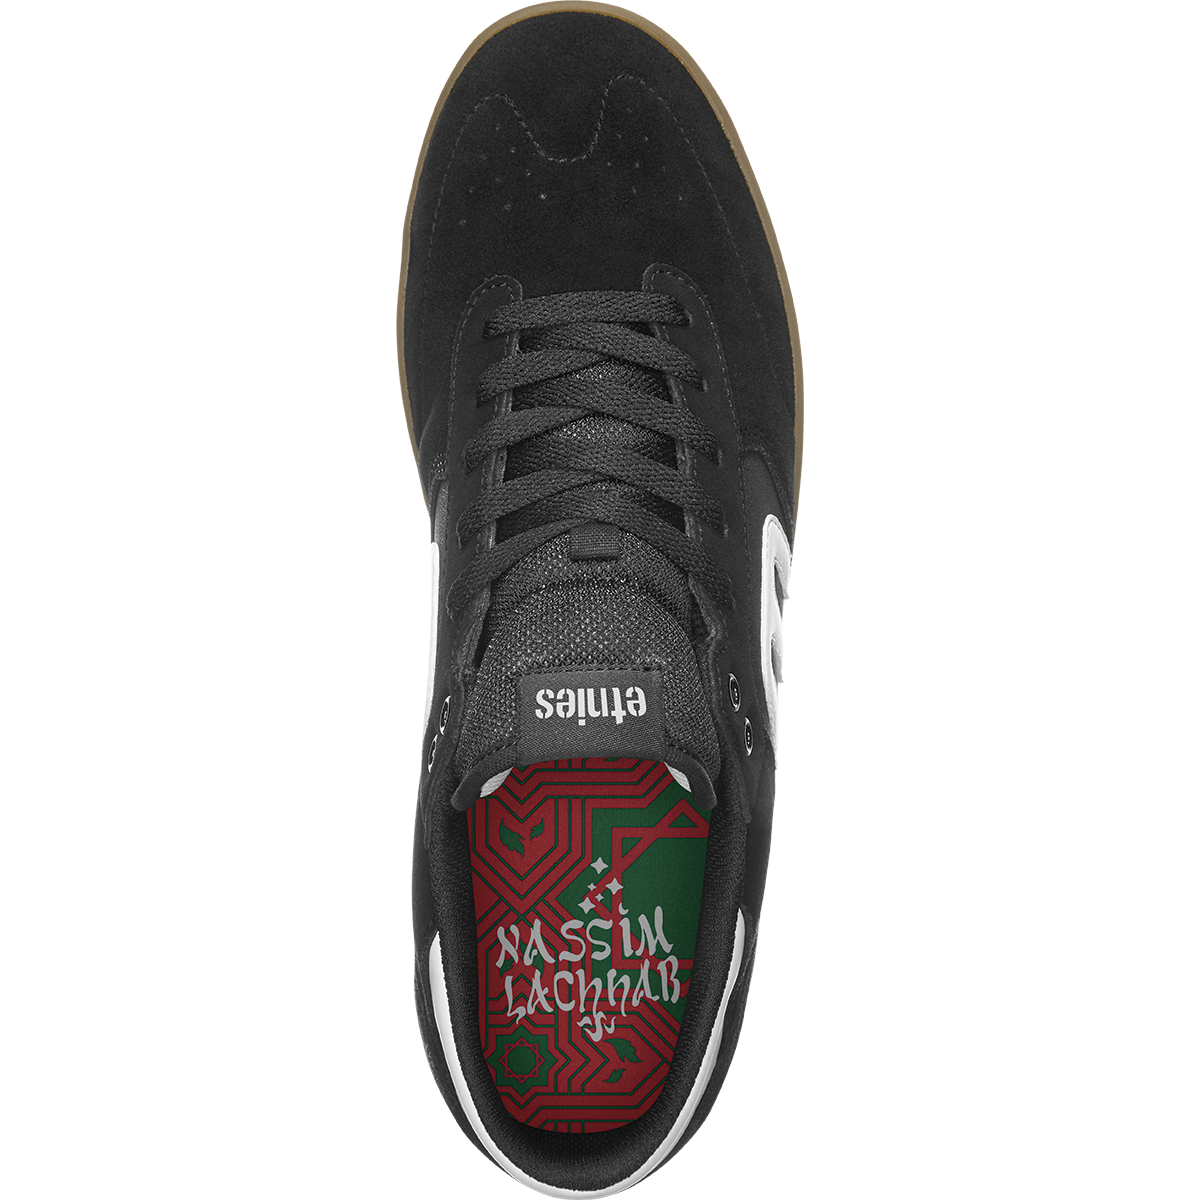 Nassim Lachhab Black/Gum Etnies Windrow Skateboard Shoe Top